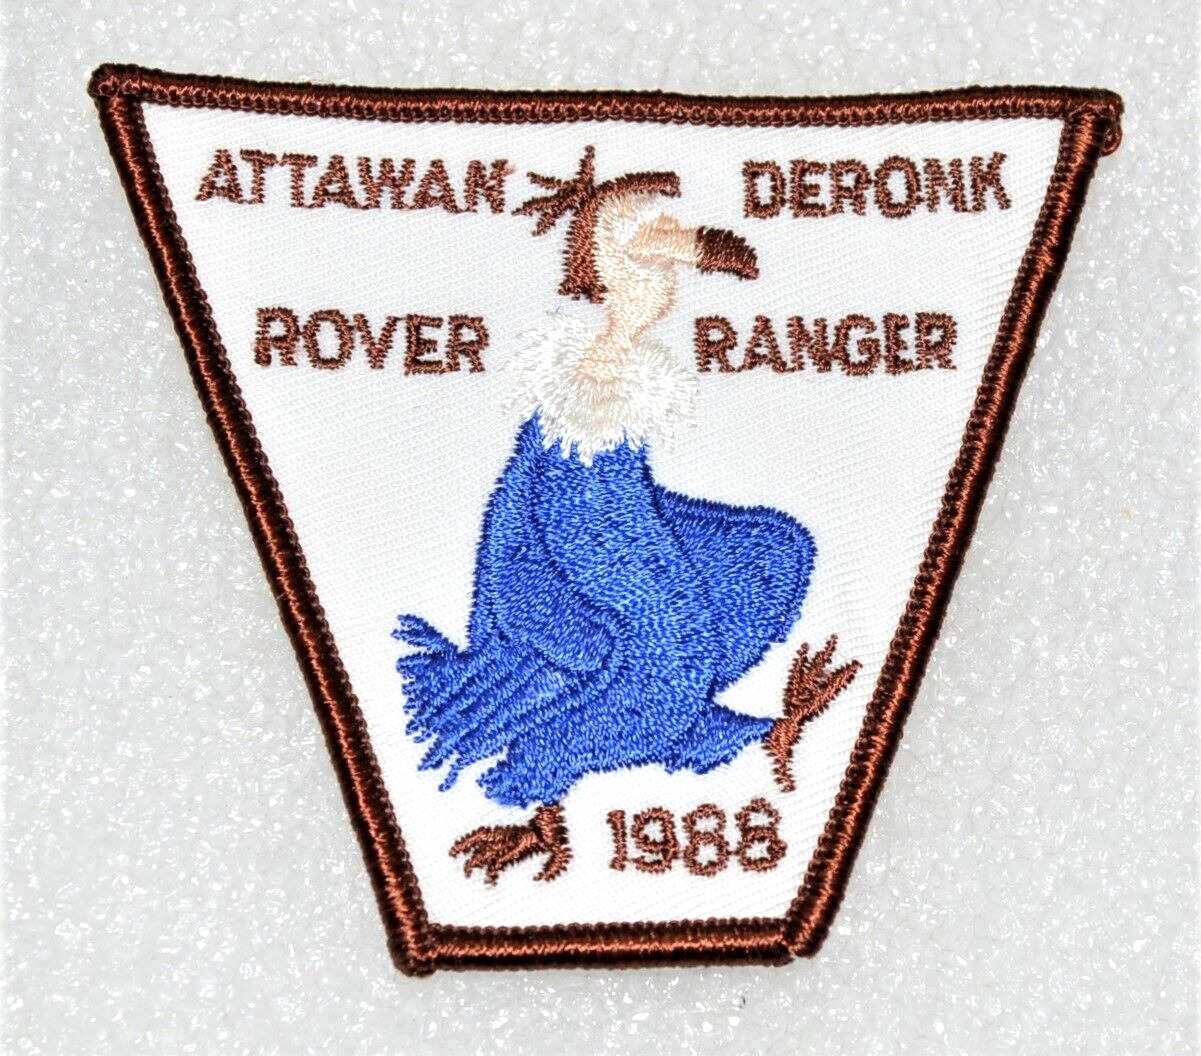 Blue Bird 1988 Attawanderonik Rover Ranger Moot Scout EVENT Badge Rolled Edge